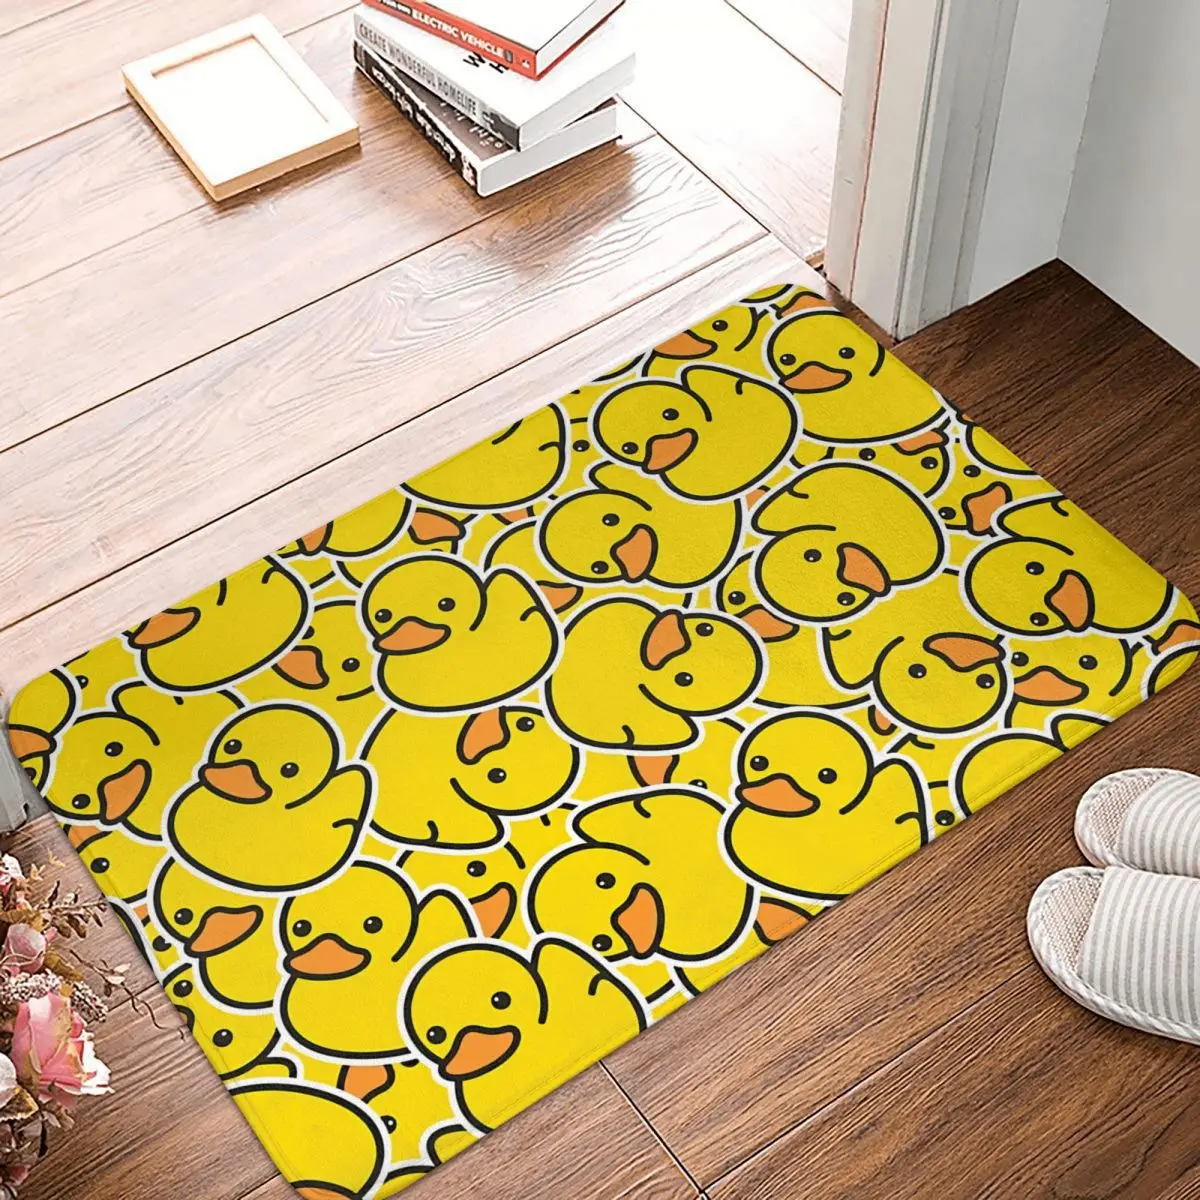 Gothic Non-slip Doormat Yellow Classic Rubber Duck Bath Kitchen Mat Prayer Carpet Indoor Modern Decor